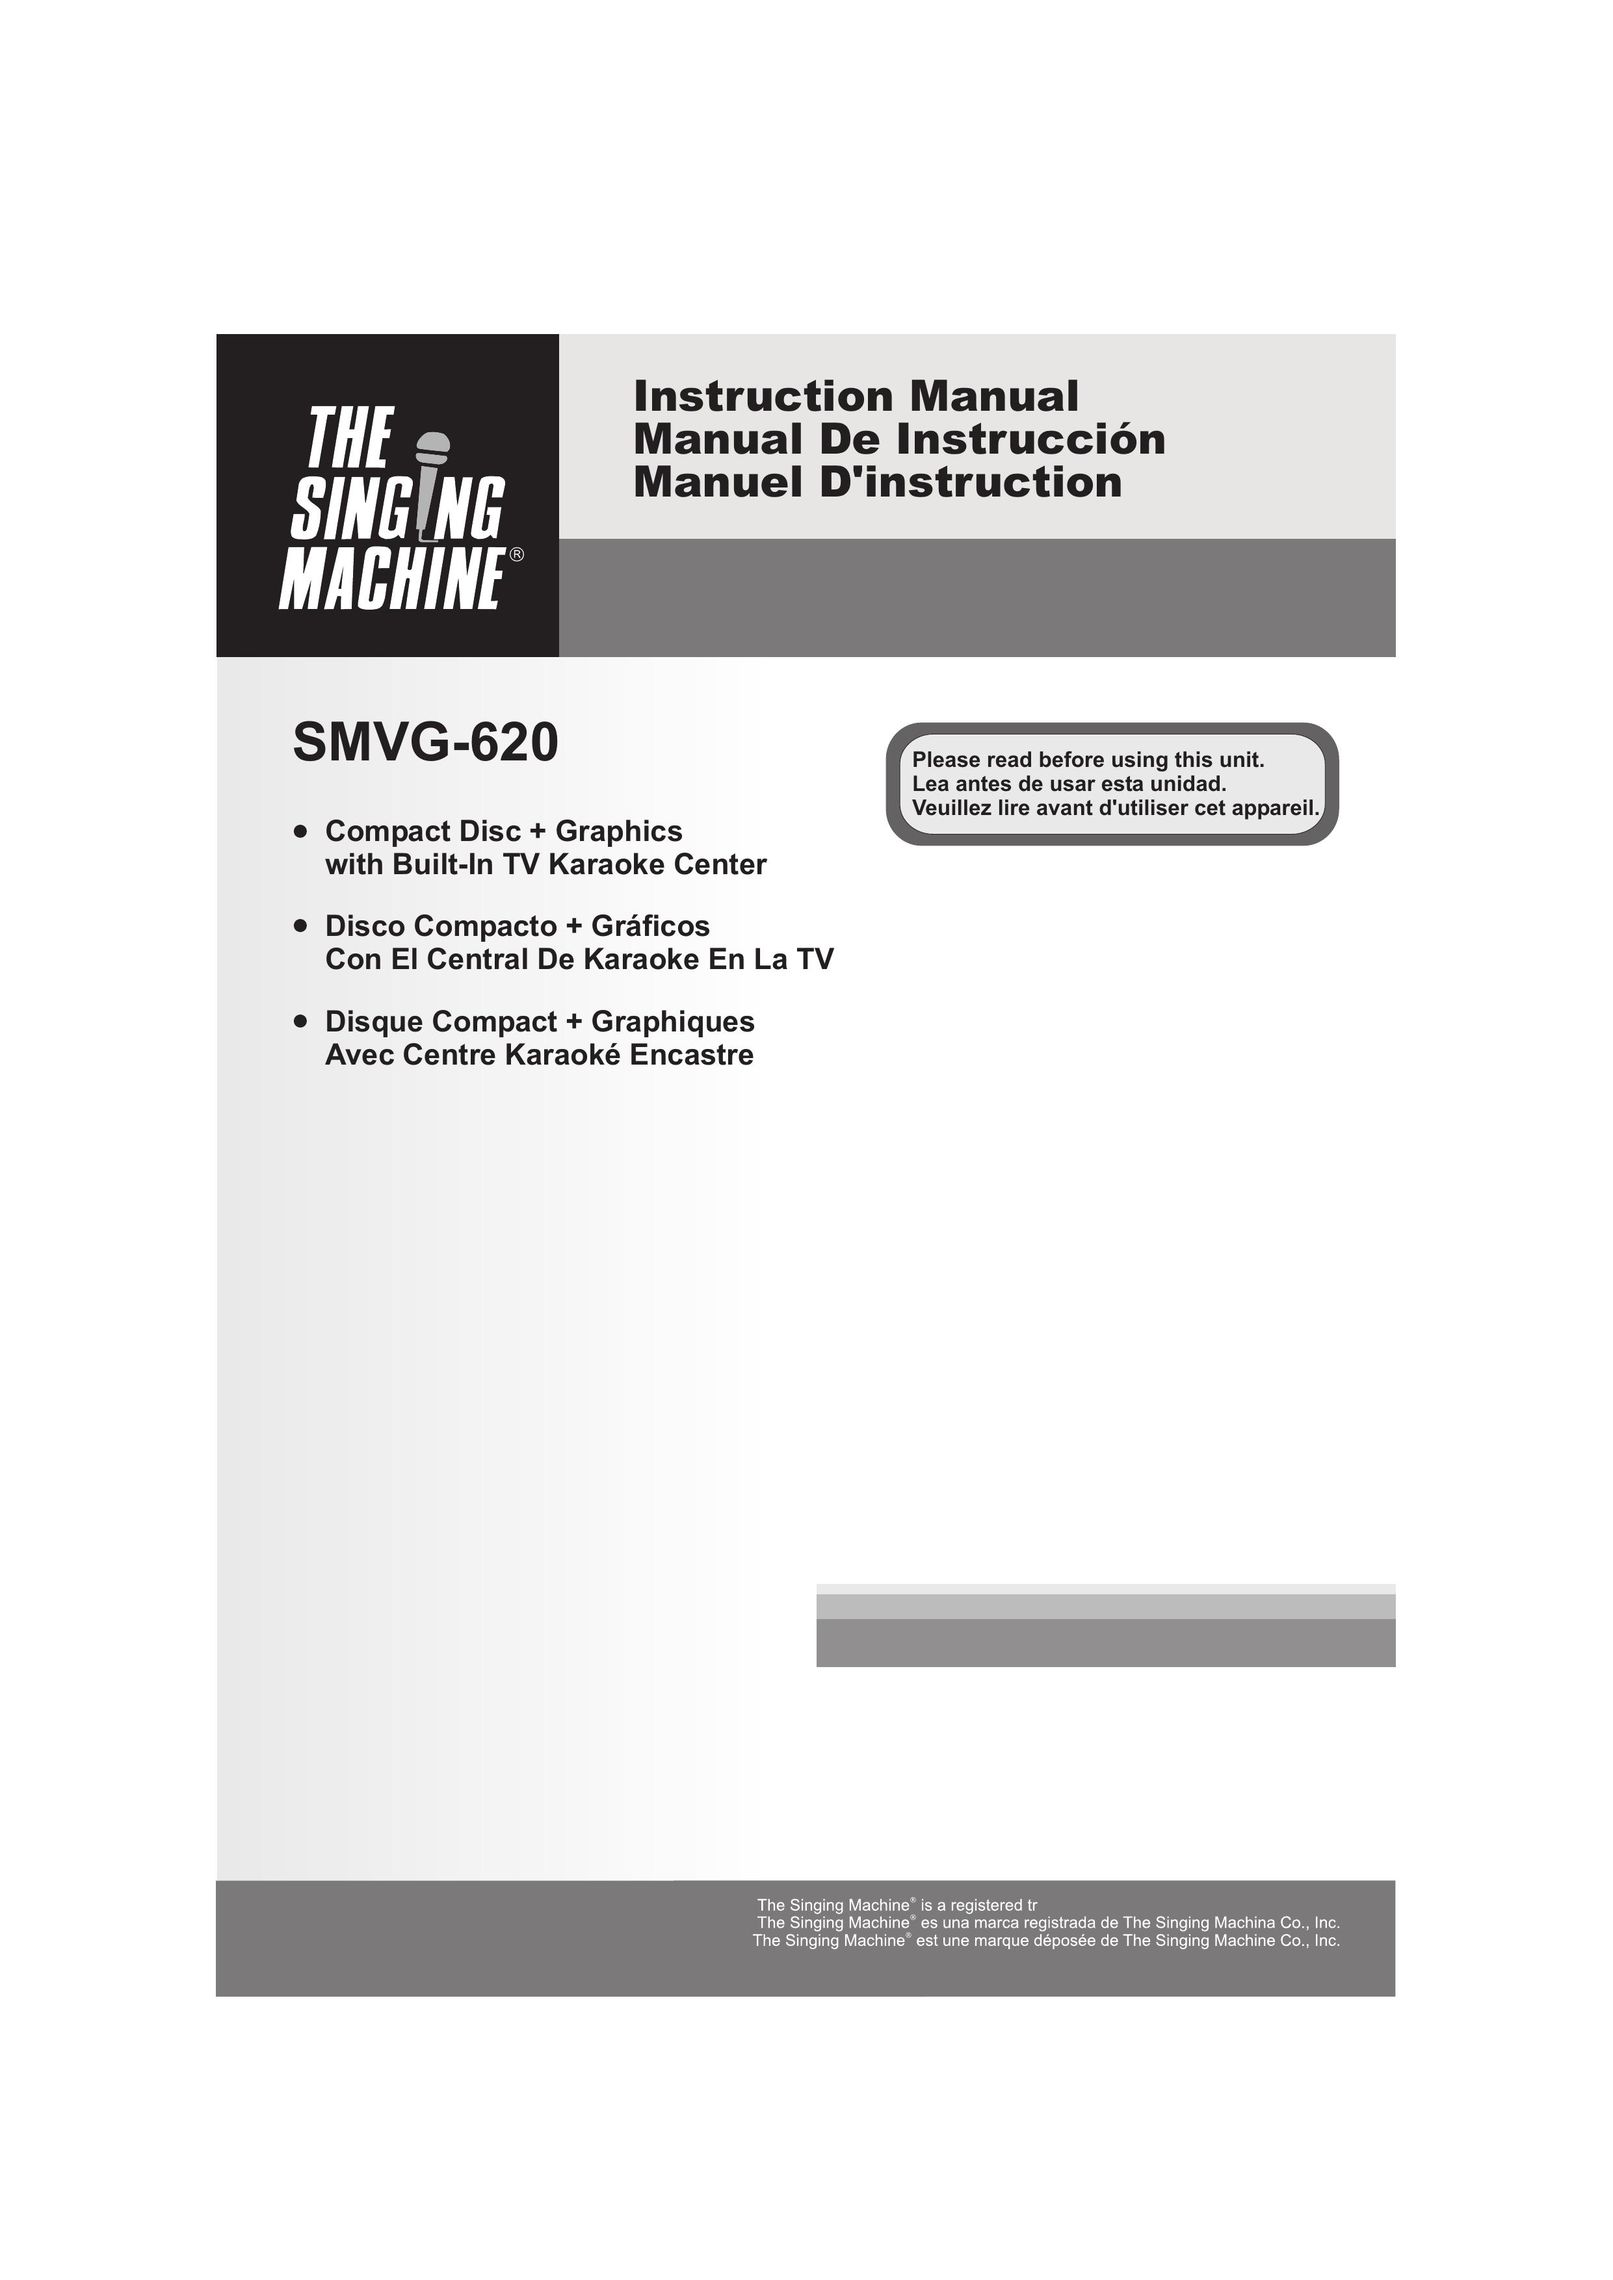 The Singing Machine SMVG-620 CD Player User Manual